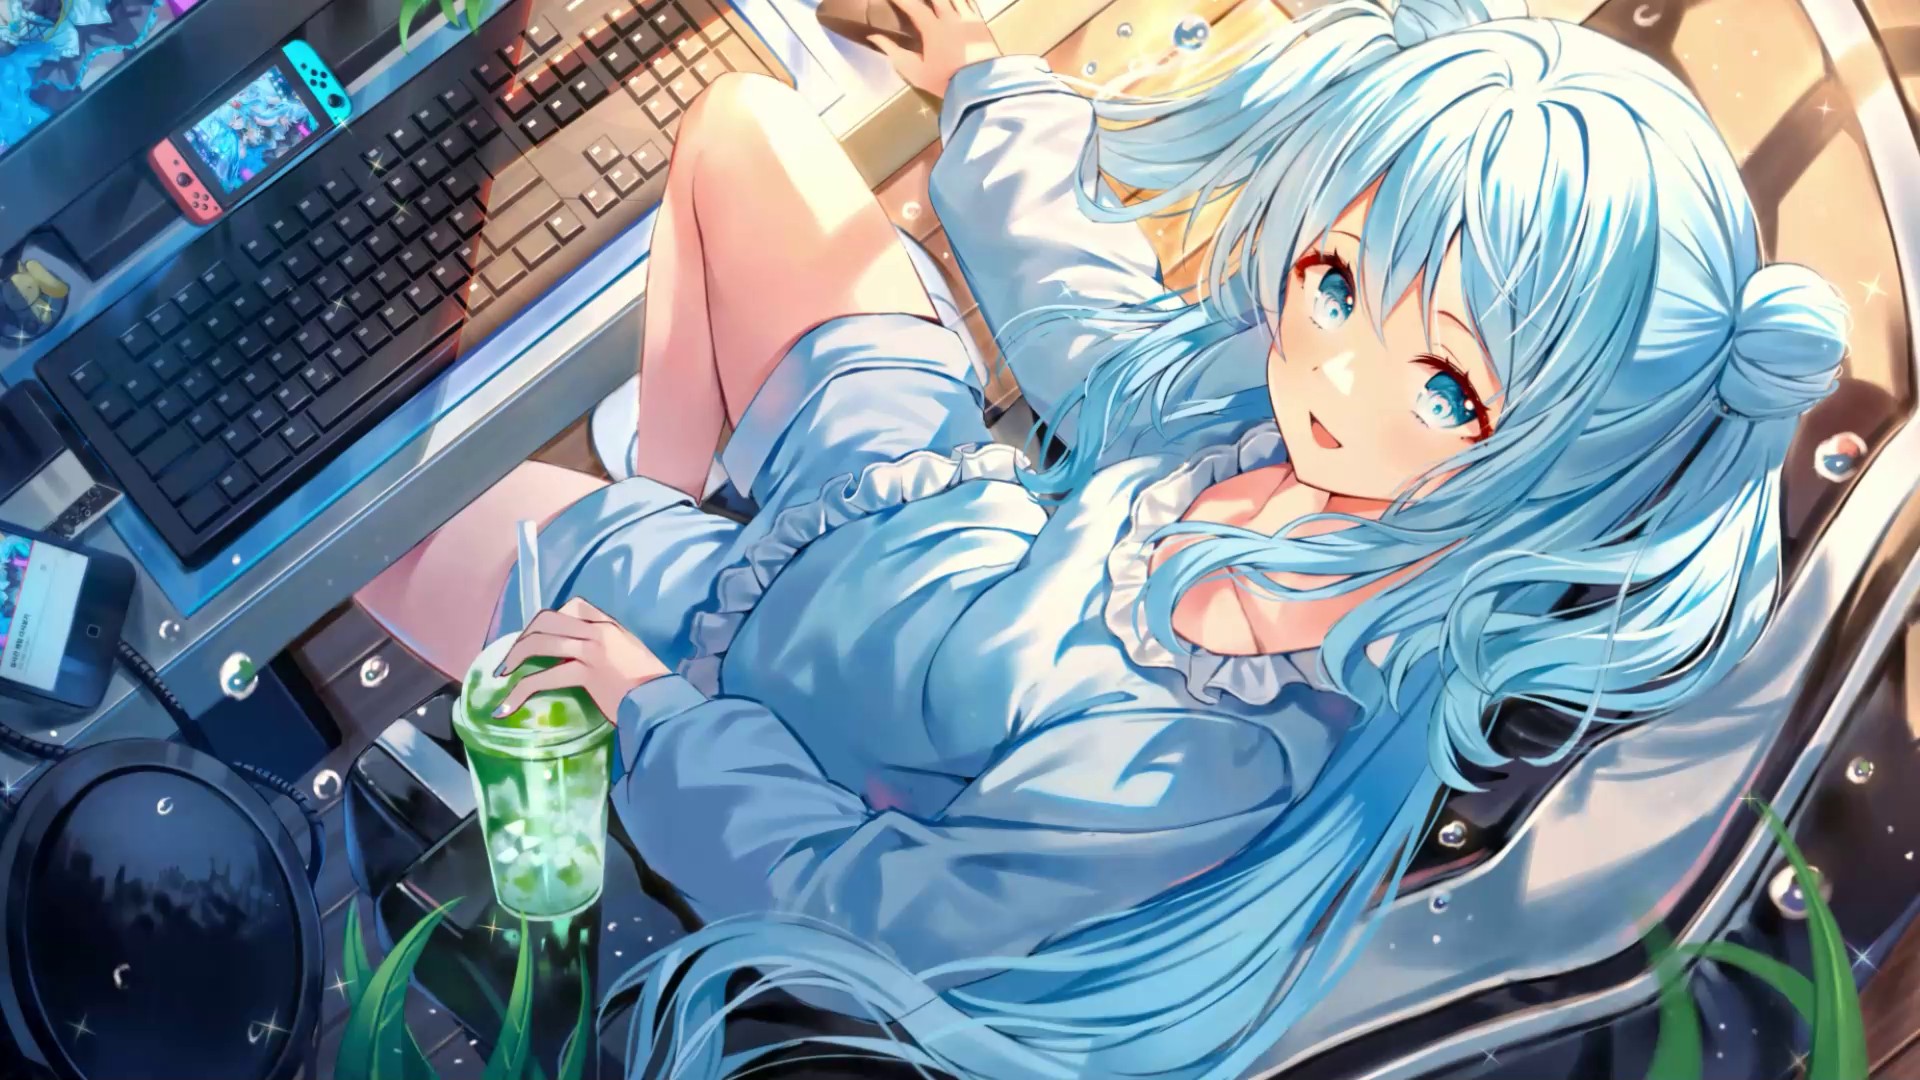 Anime For Gamers - Game Informer